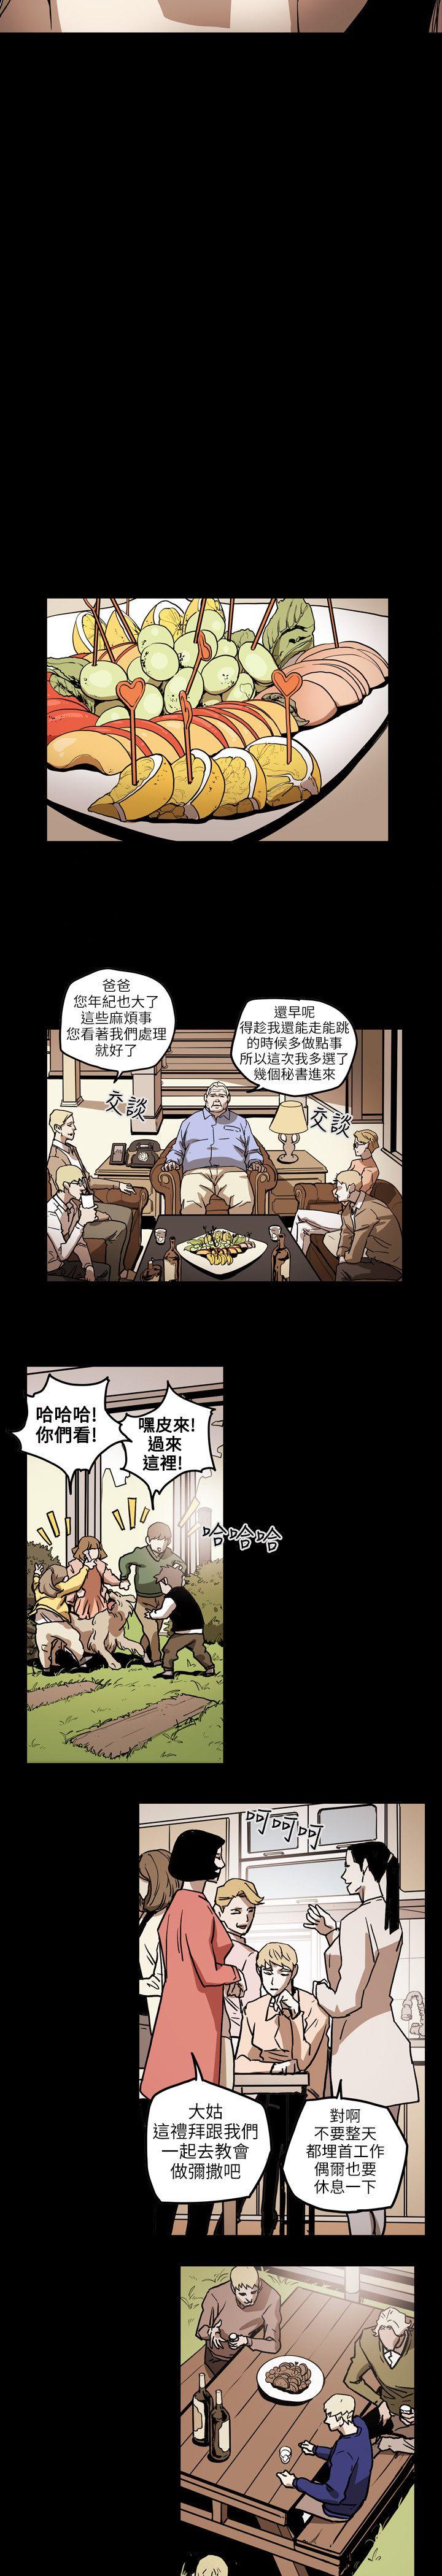 Honey trap 甜蜜陷阱  第70话 漫画图片5.jpg